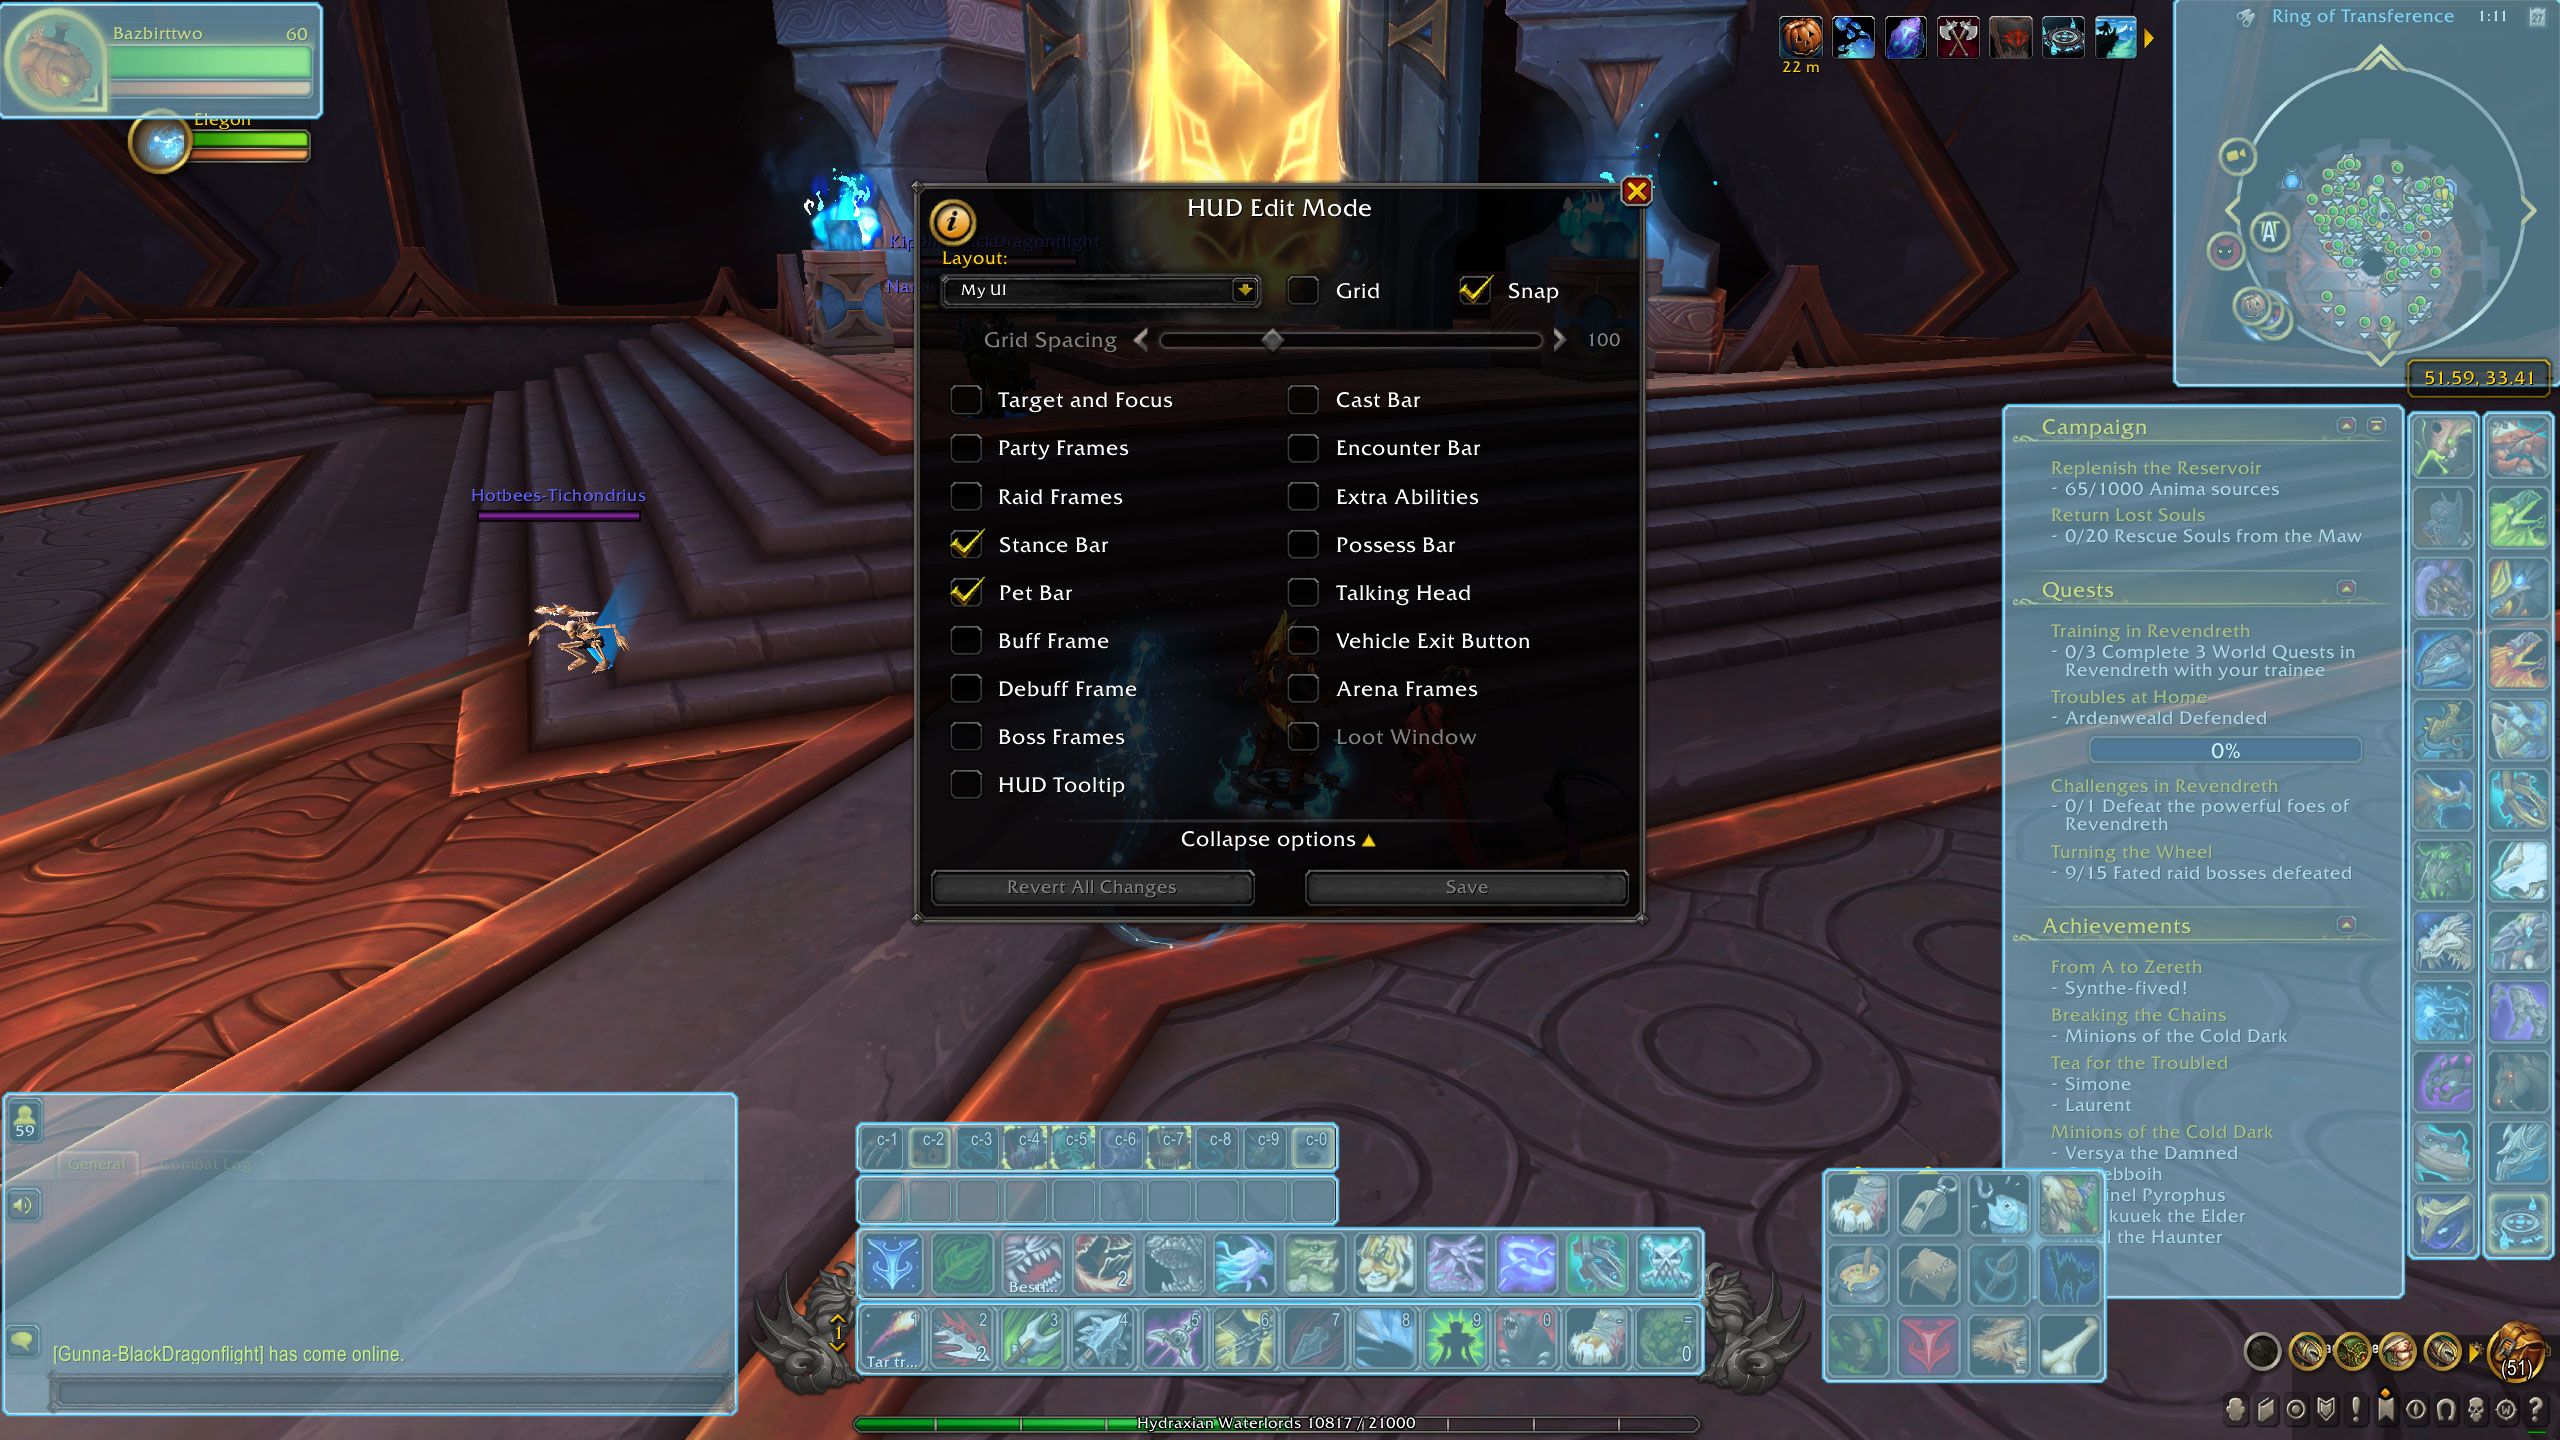 World of Warcraft Dragonflight new UI edit mode